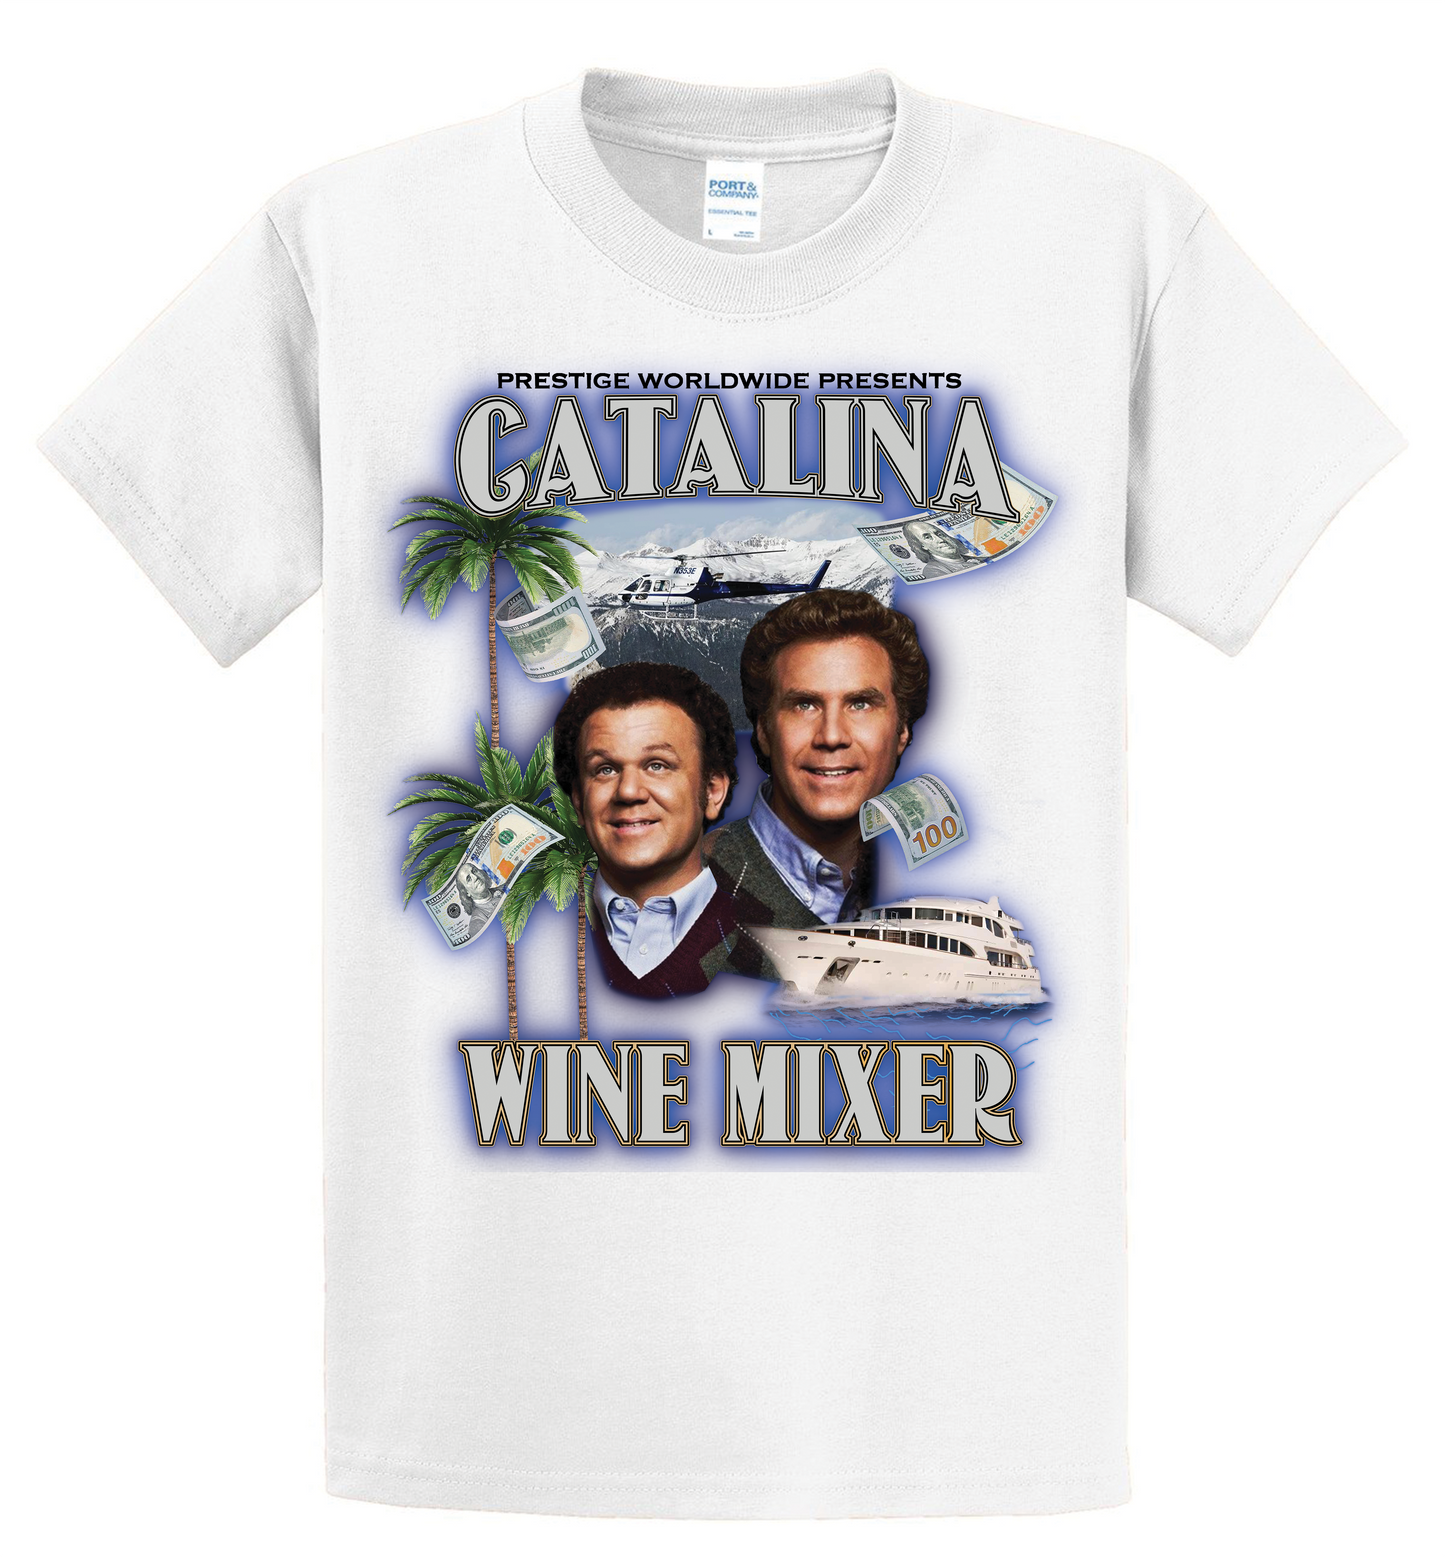 Step brothers Catalina wine mixer tee